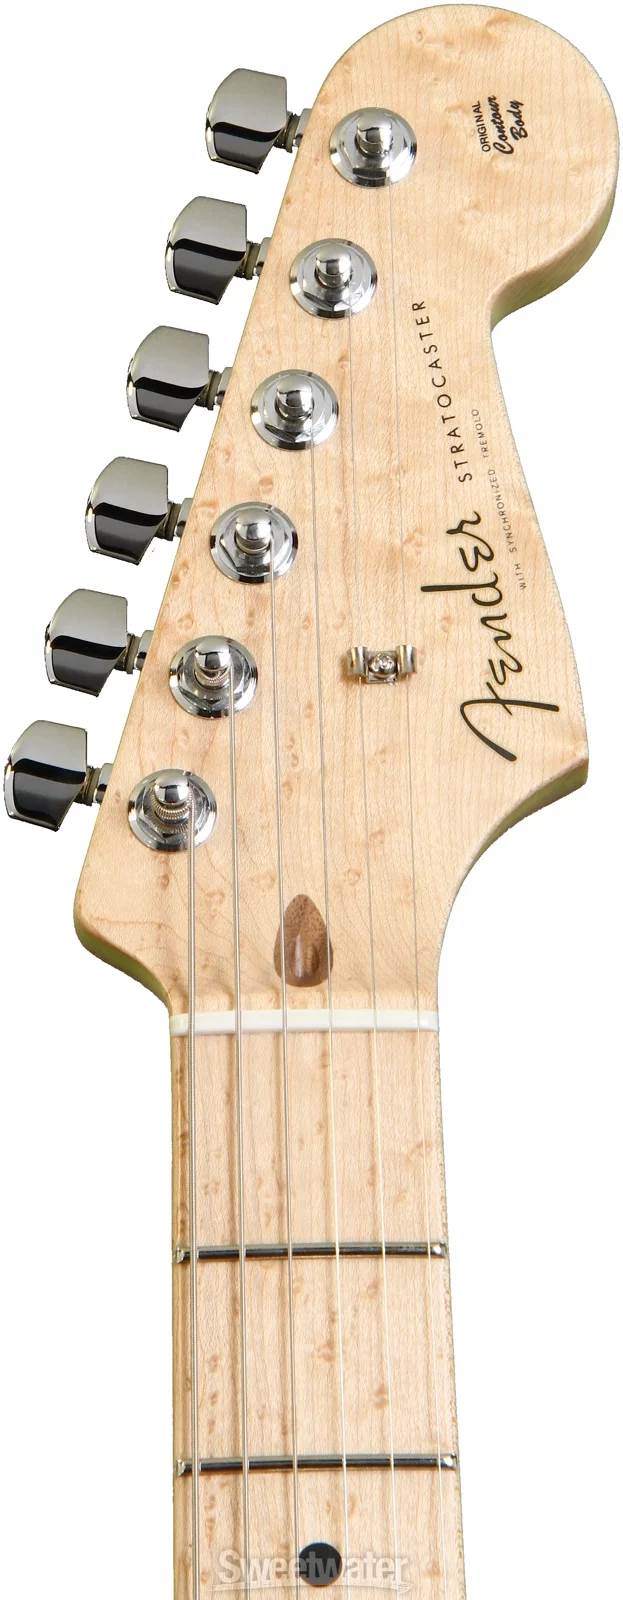 2014 Custom Deluxe Stratocaster headstock